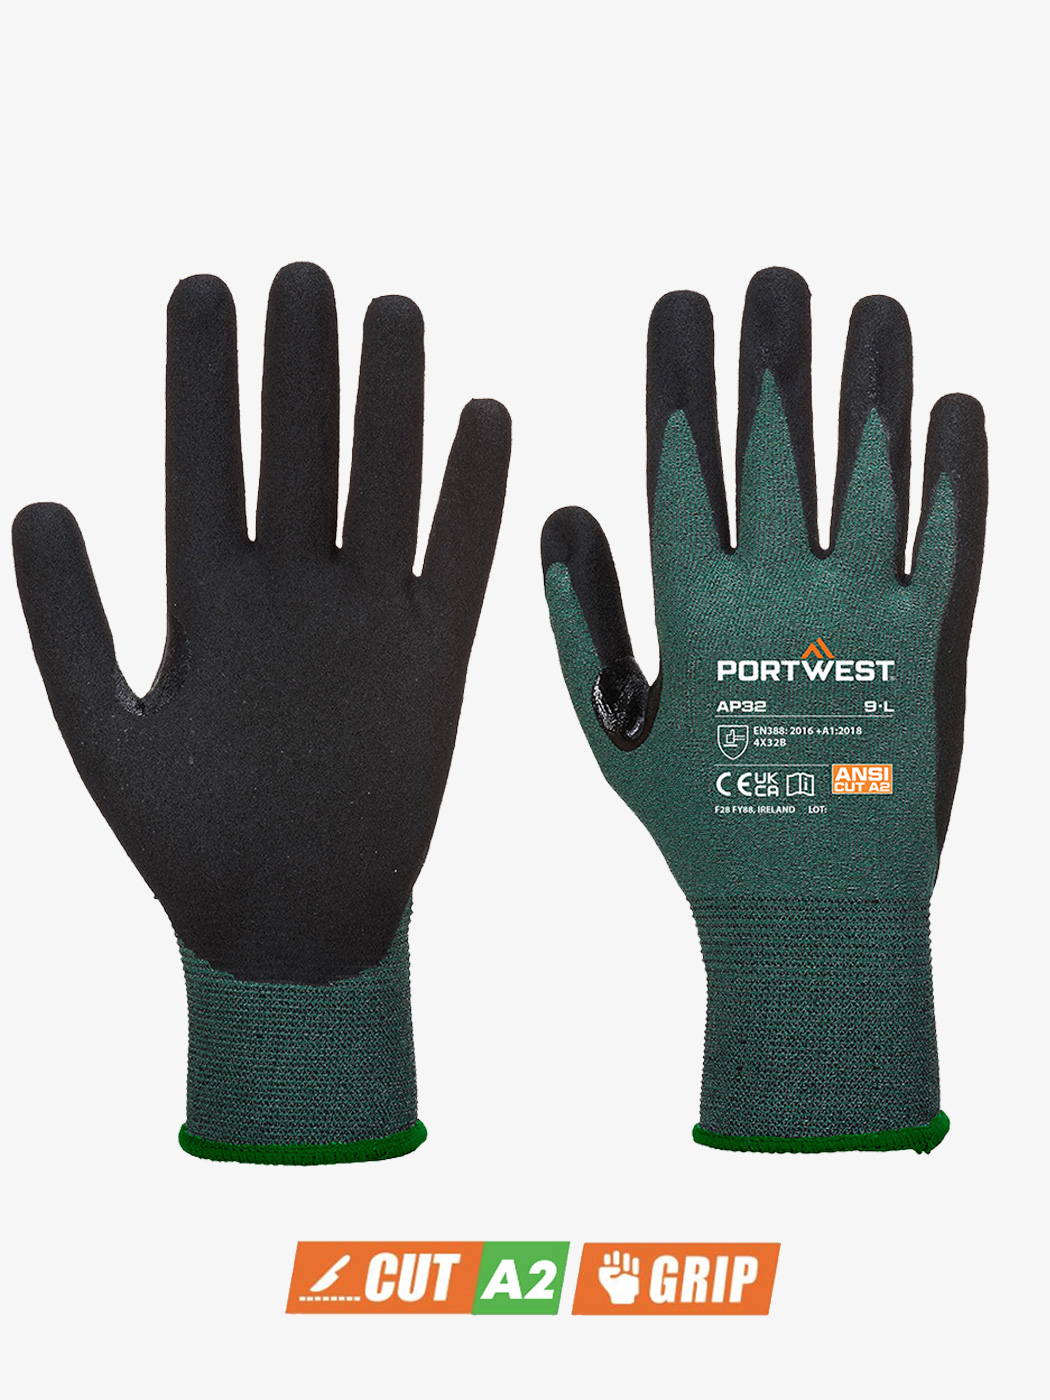 Dexti Cut Pro Glove – Style AP32